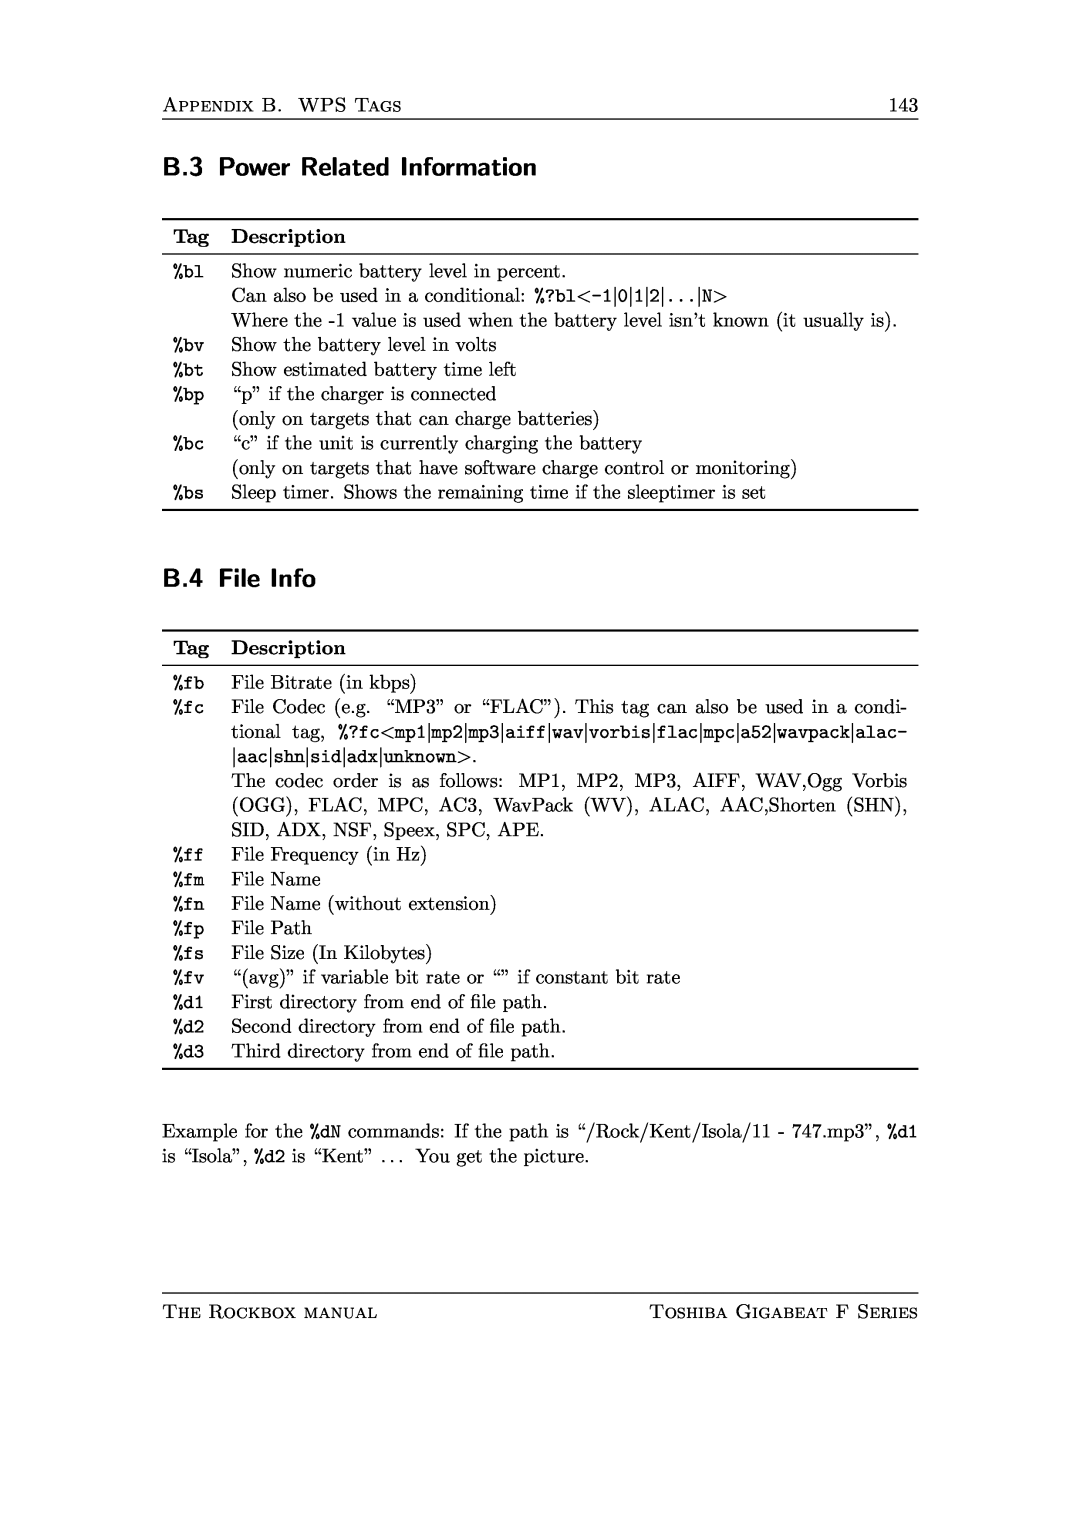 Toshiba F Series manual B.3 Power Related Information, B.4 File Info 